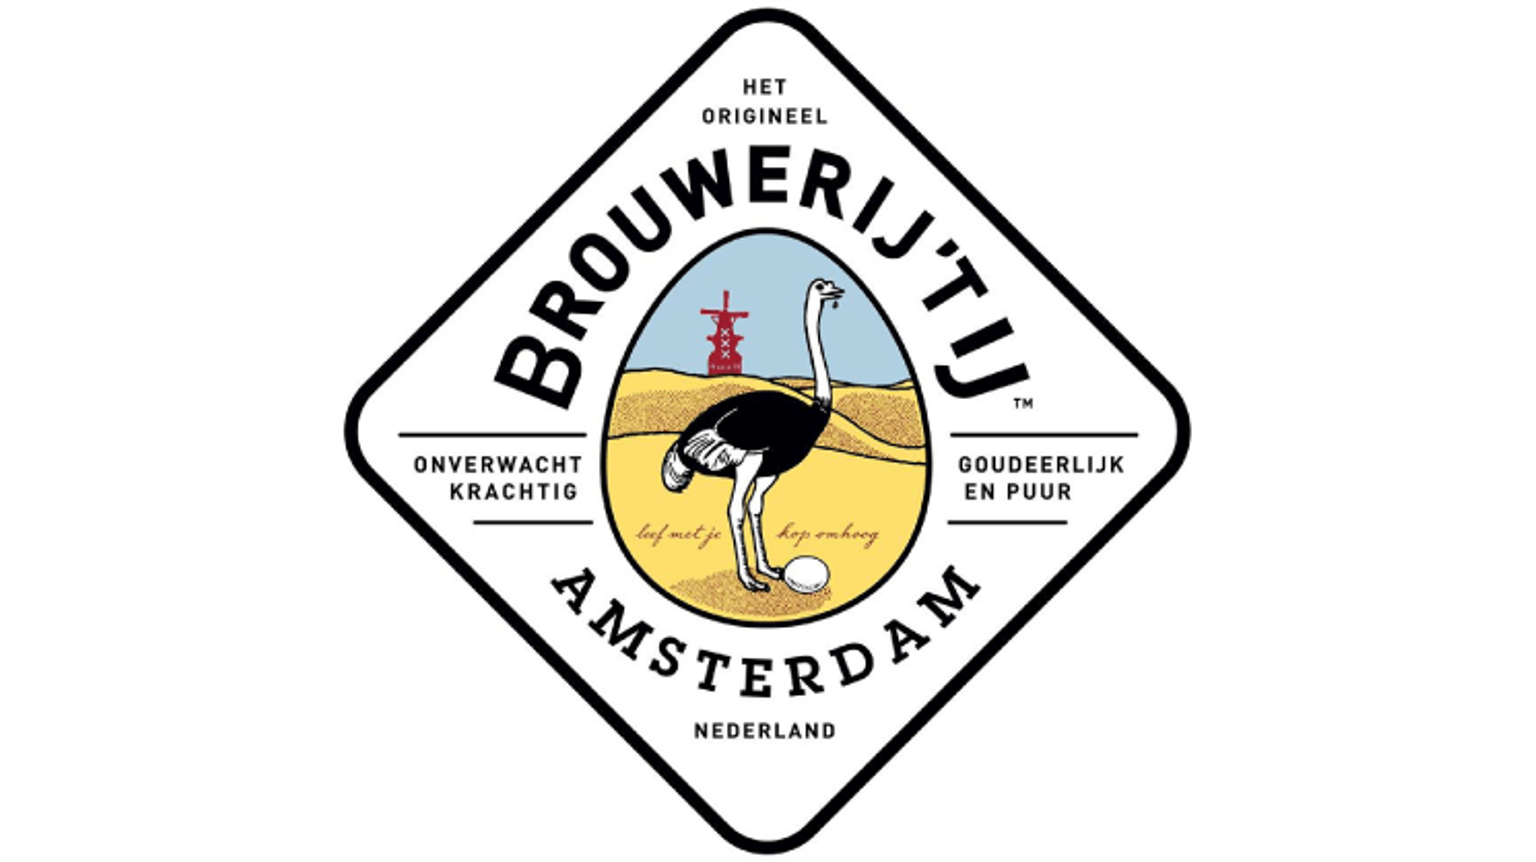 thumbnail for blog article named: Brouwerij 't Ij, une brasserie néerlandaise hors du commun